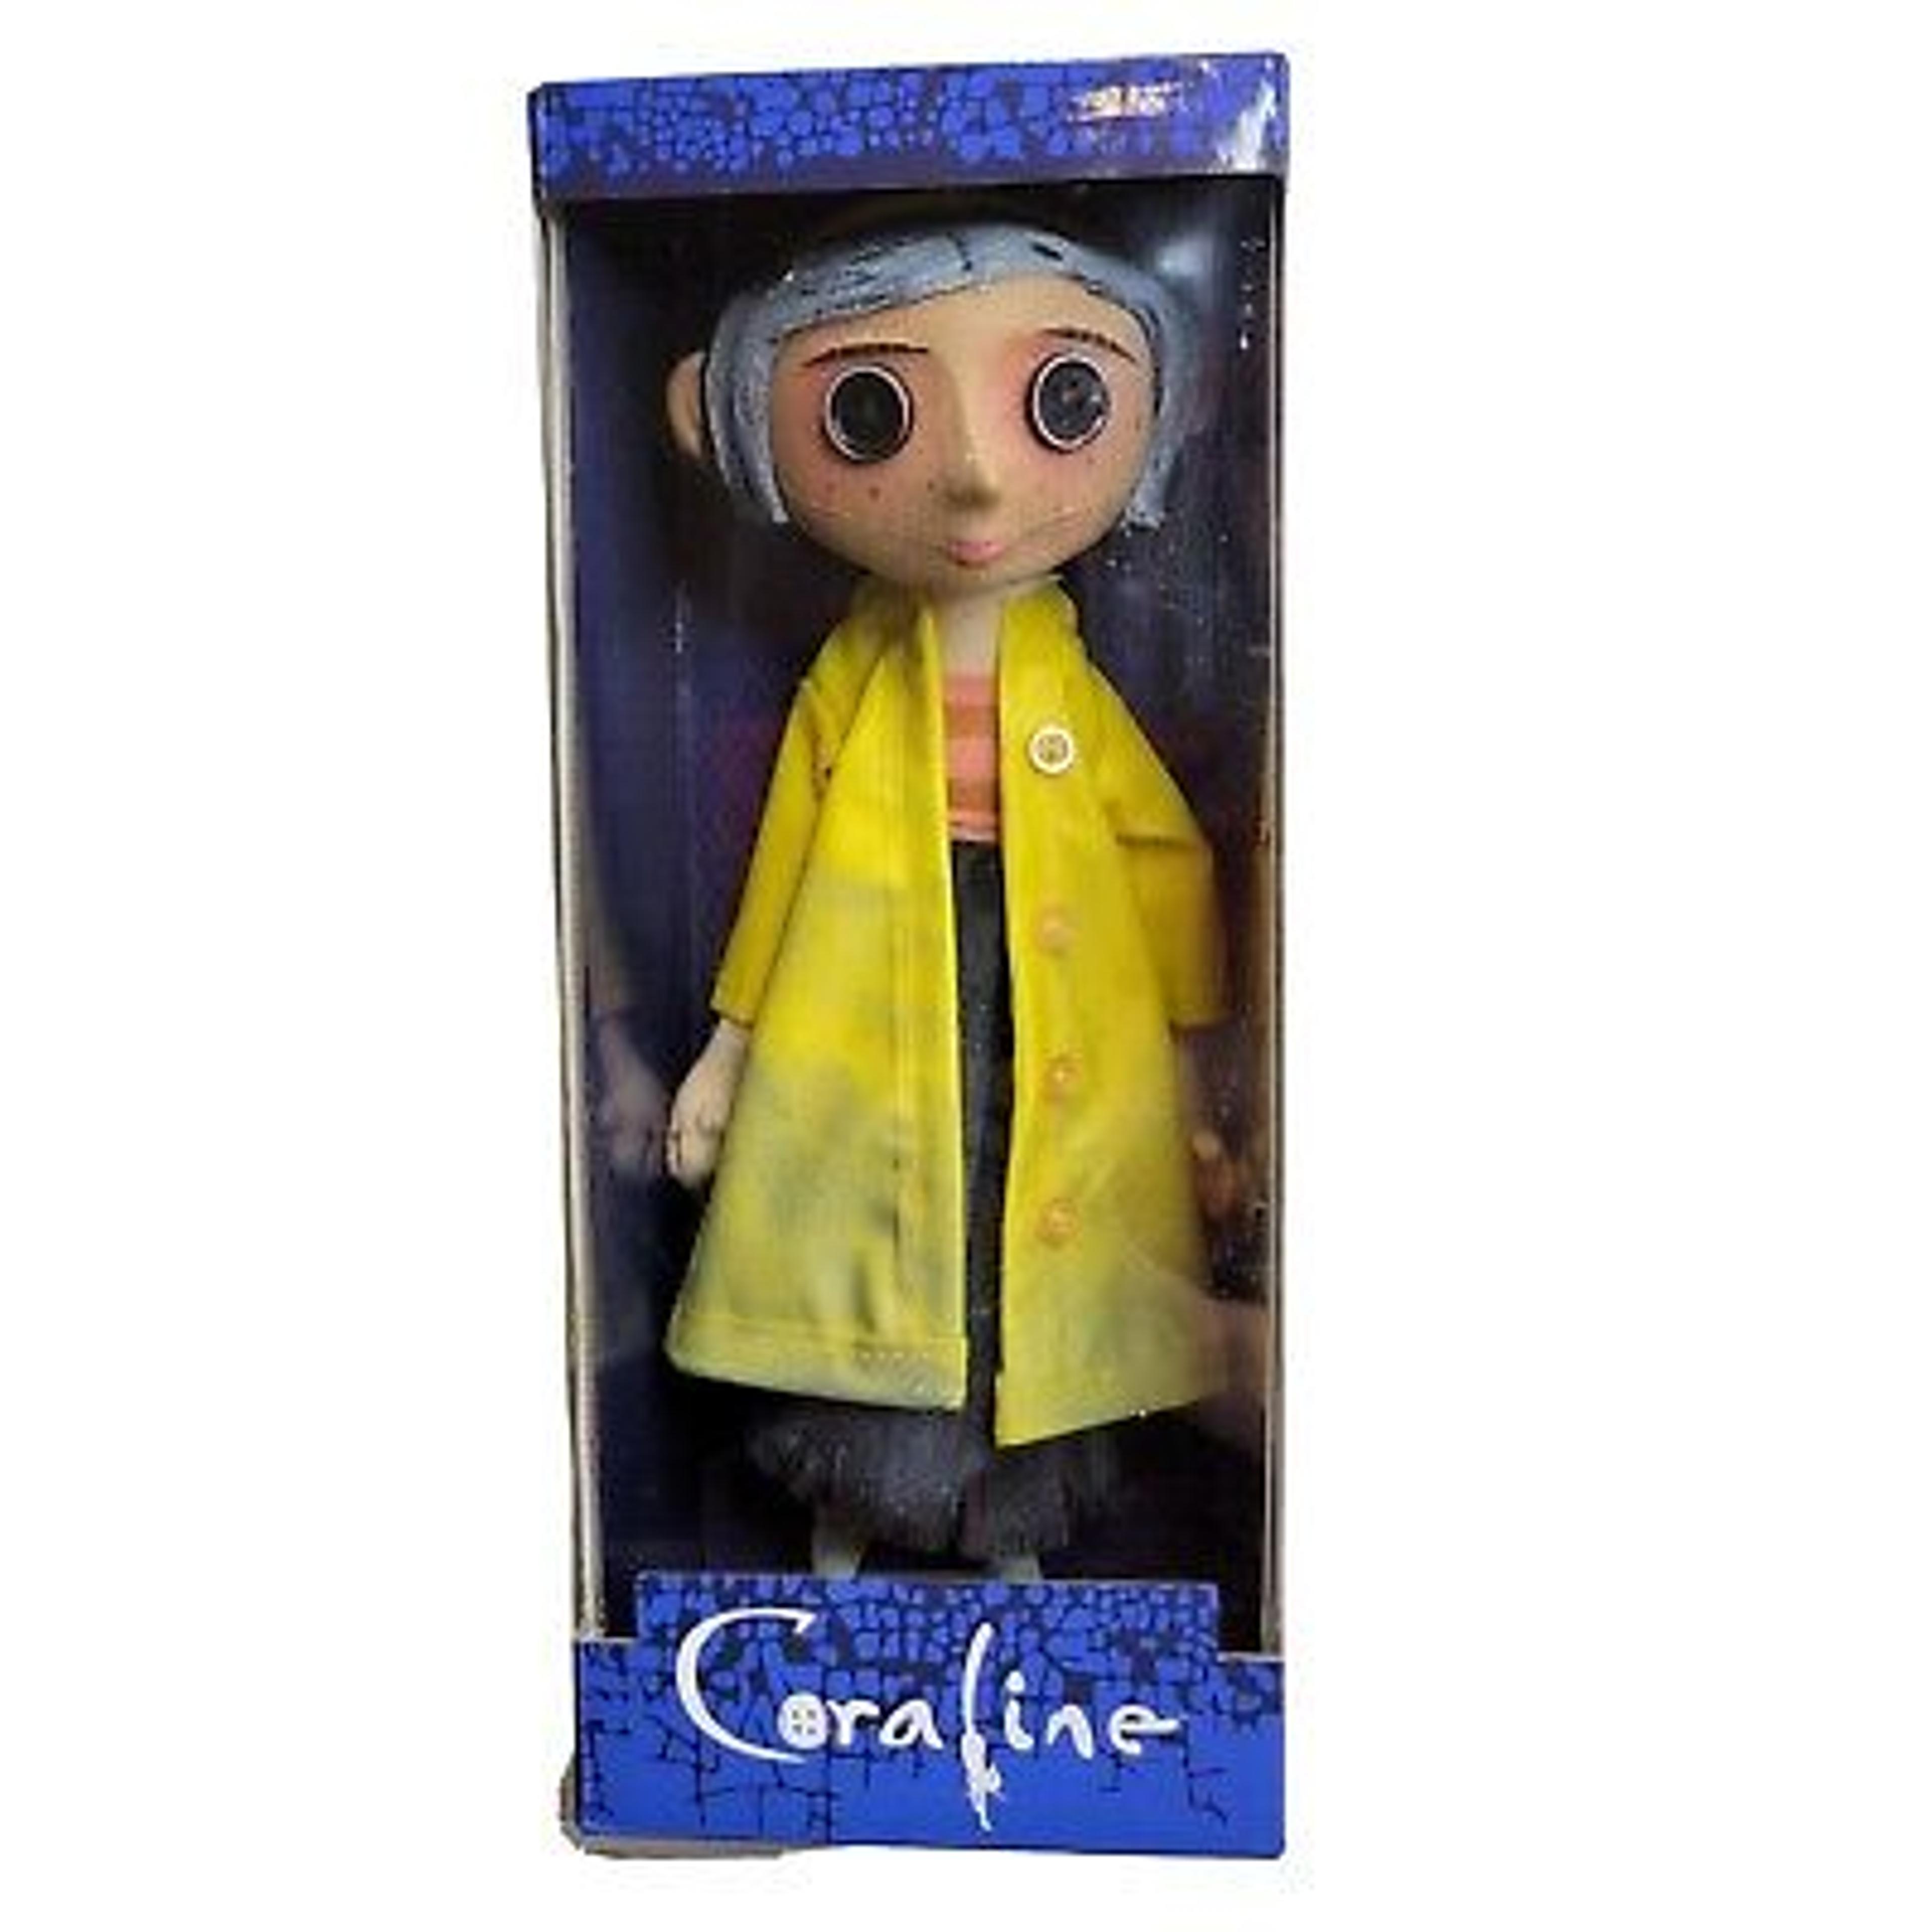 2018 10 IN CORALINE Prop Replica Doll Raincoat & Boots | NECA/Laika | New in Box  | eBay